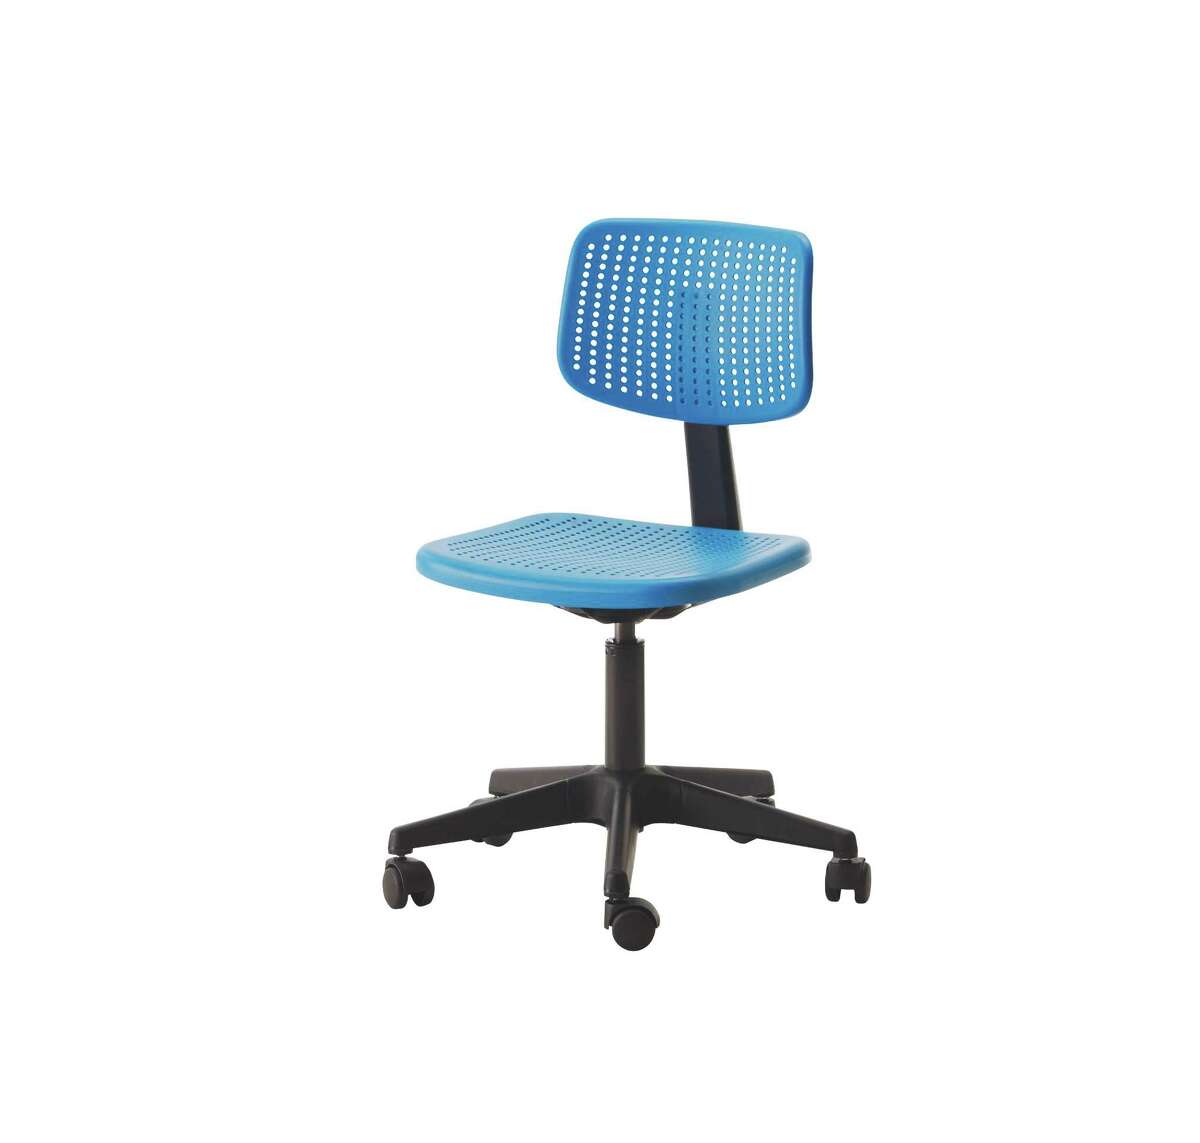 Alrik swivel chair, $14.99 at Ikea